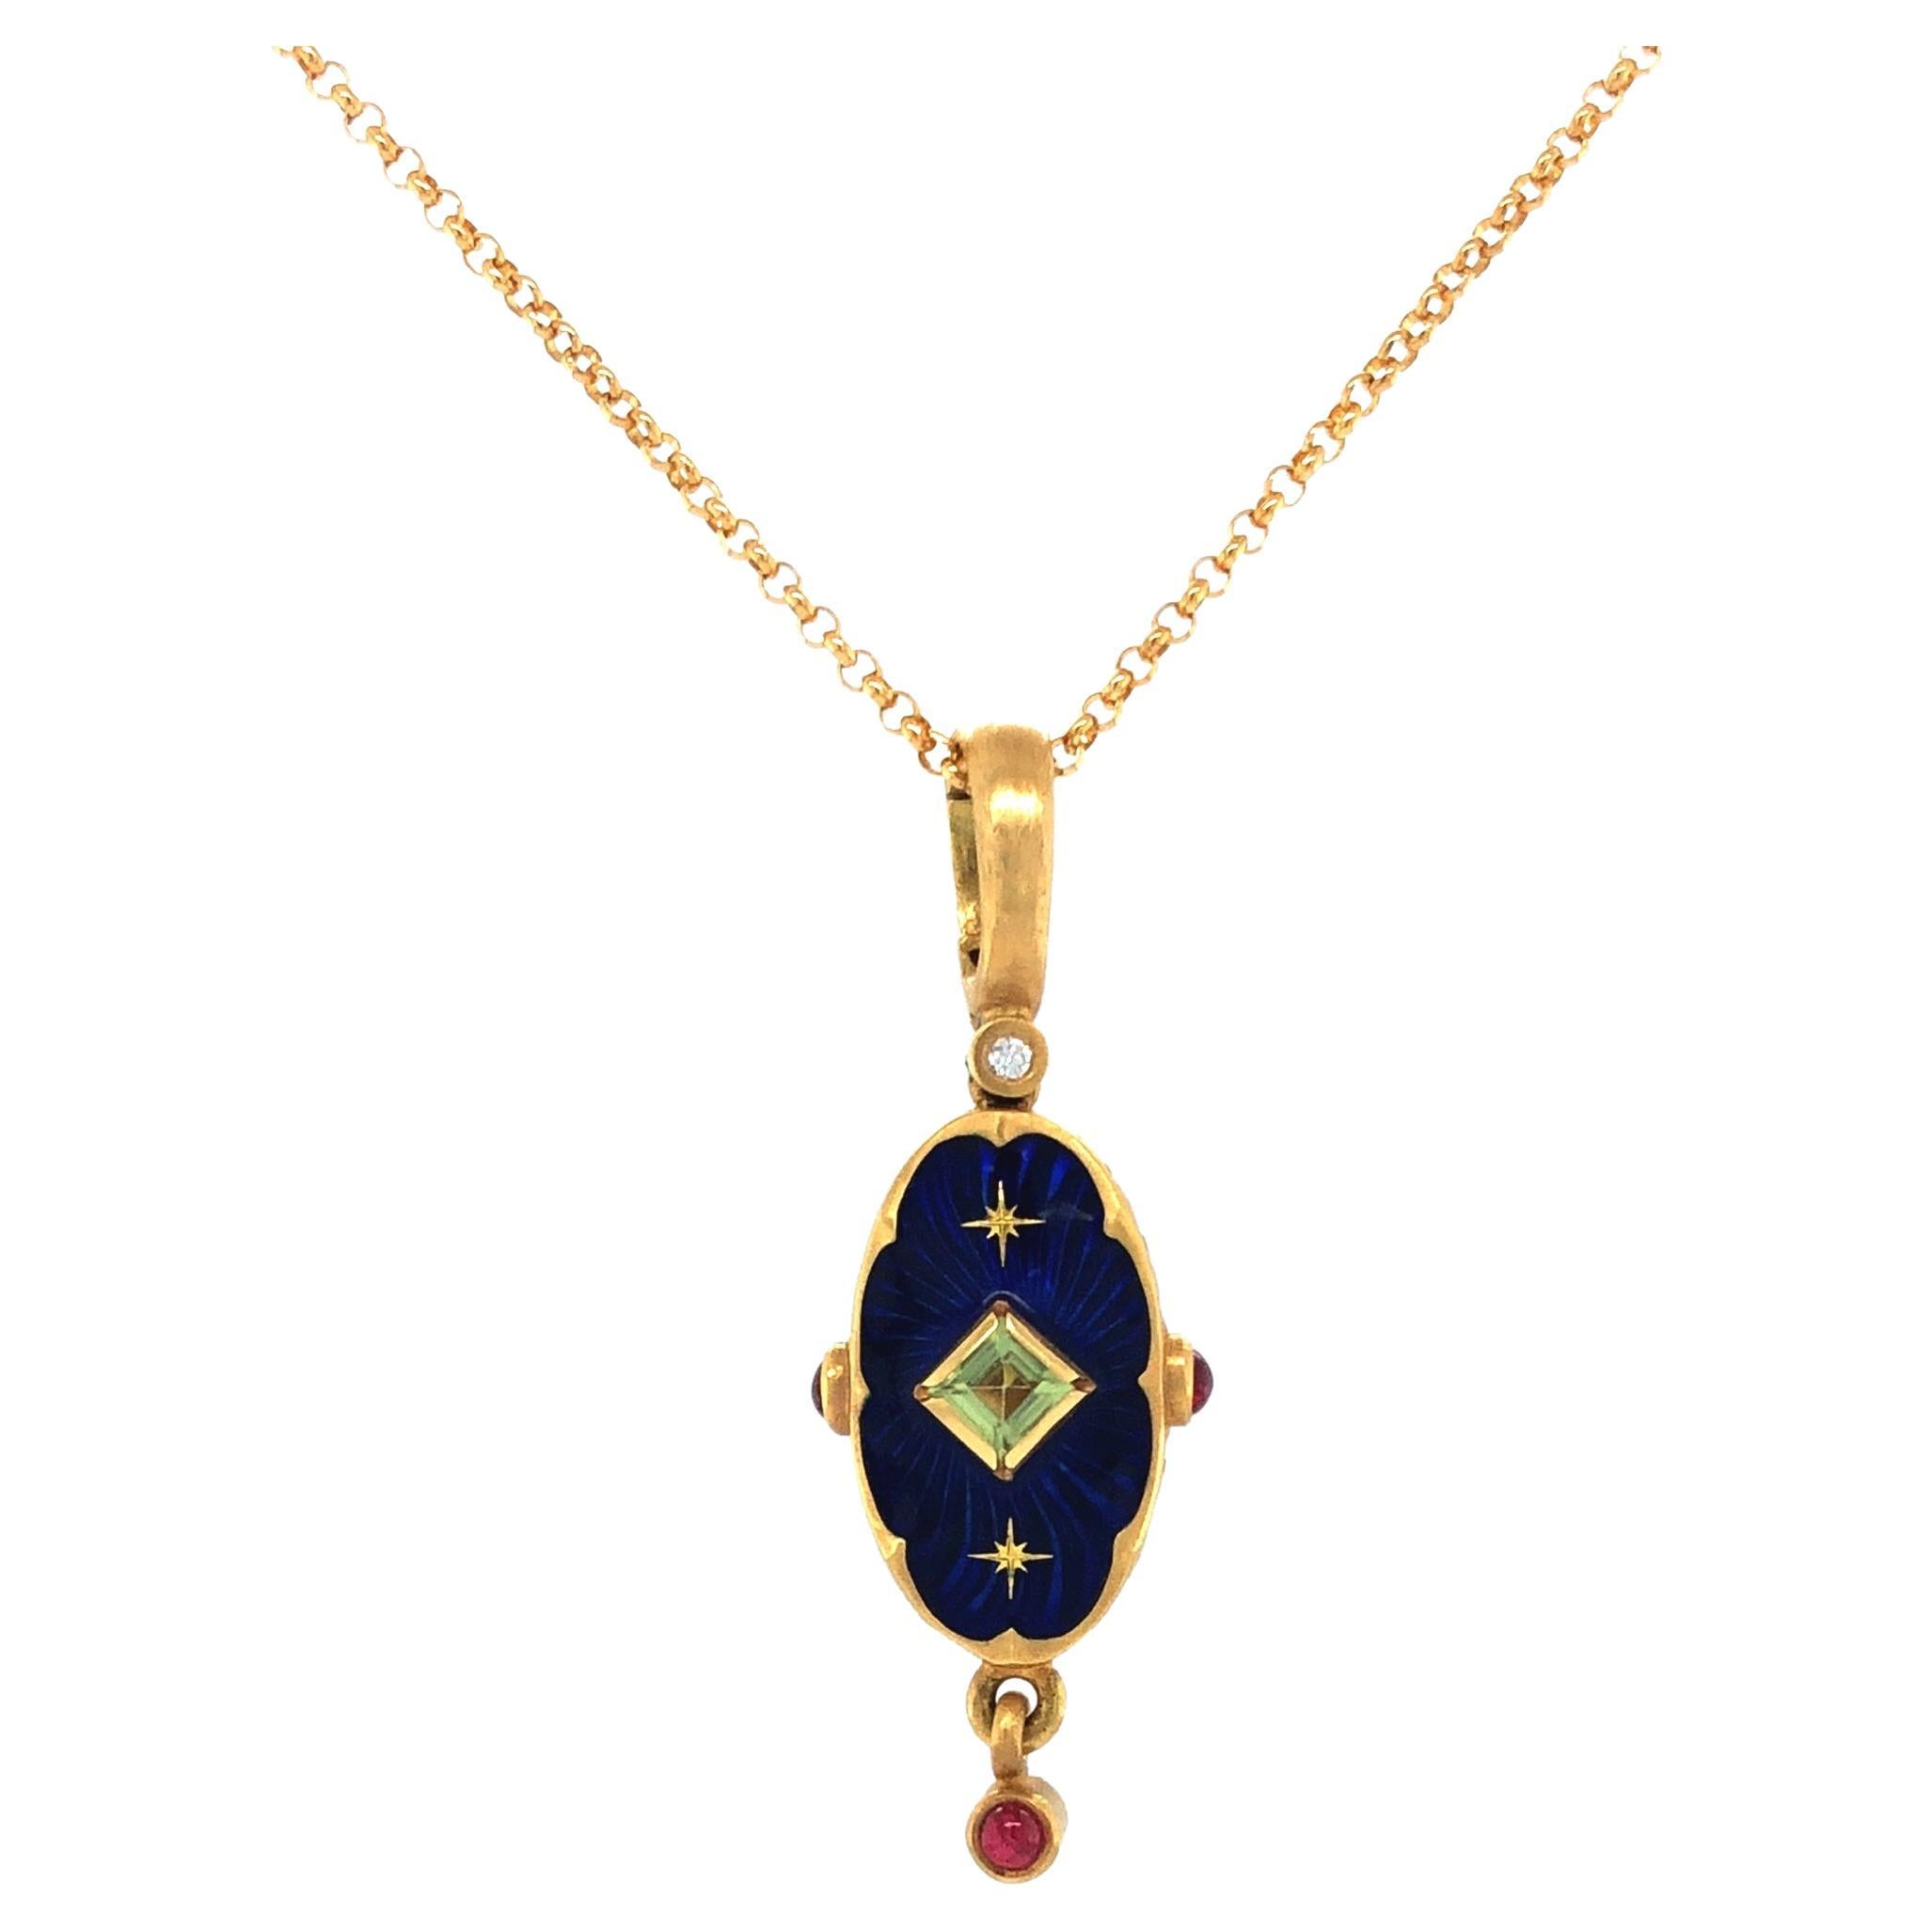 Oval Pendant Necklace - 18k Yellow Gold - Blue Enamel 1 Peridot 3 Rubies 2 Stars For Sale